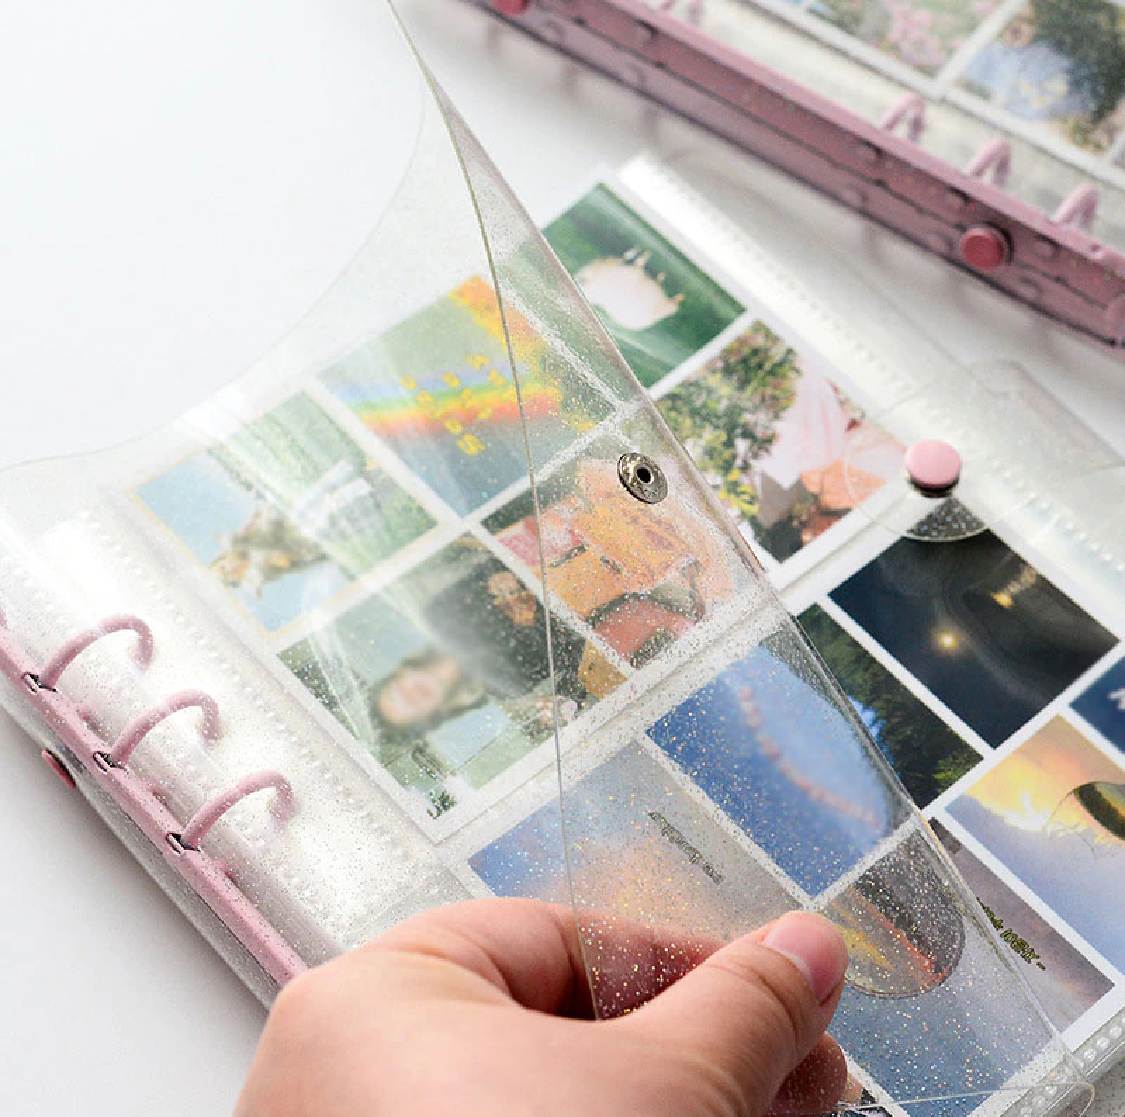 Binder para Photocards + 25 bolsillos de 4 espacios, “Glitter”